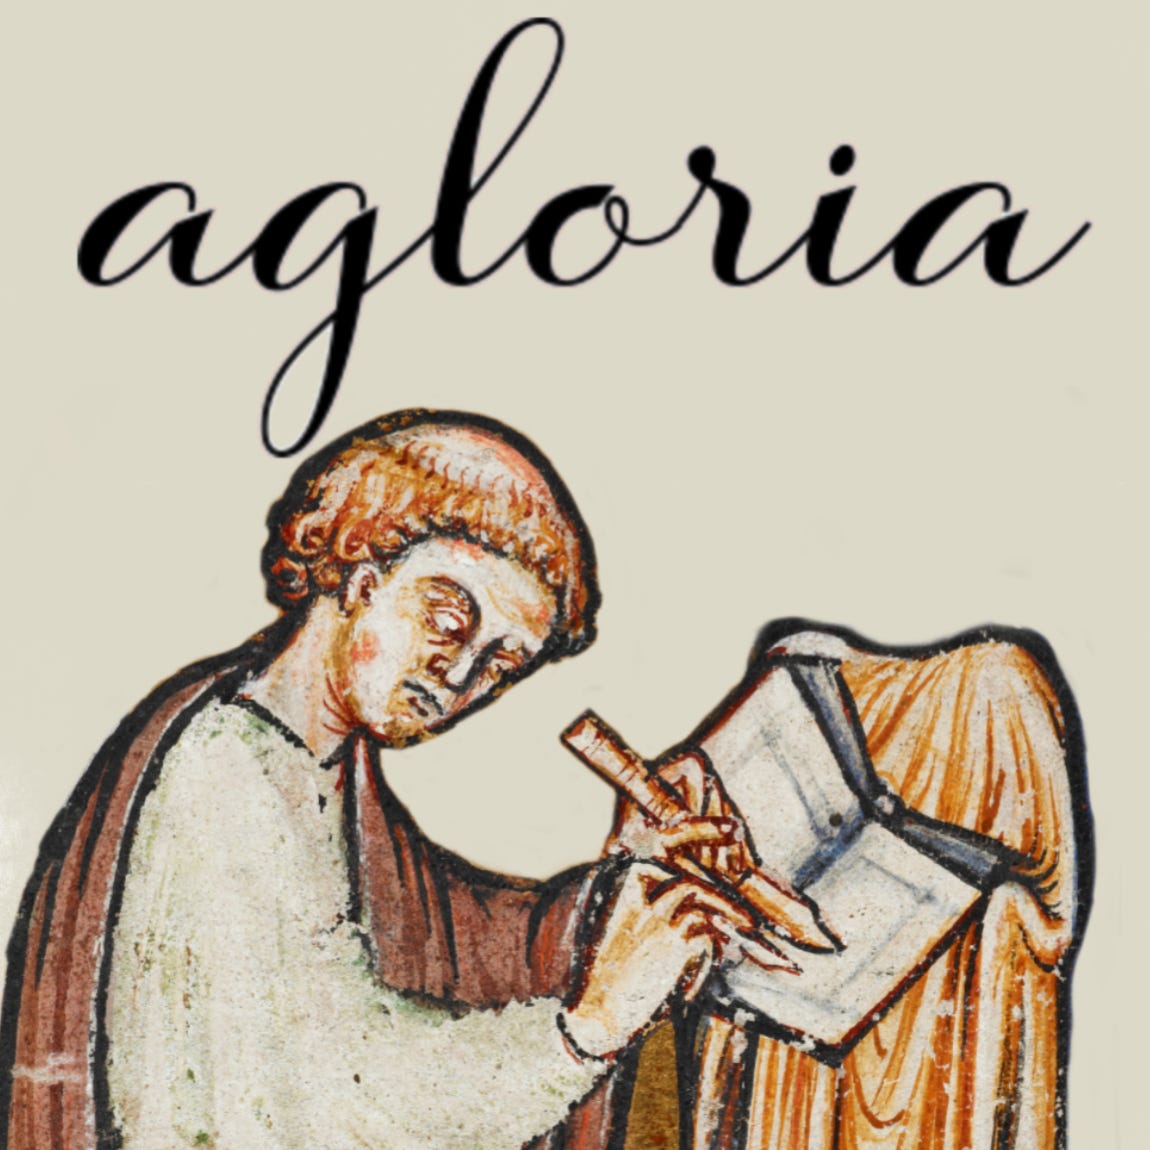 Artwork for Agloria